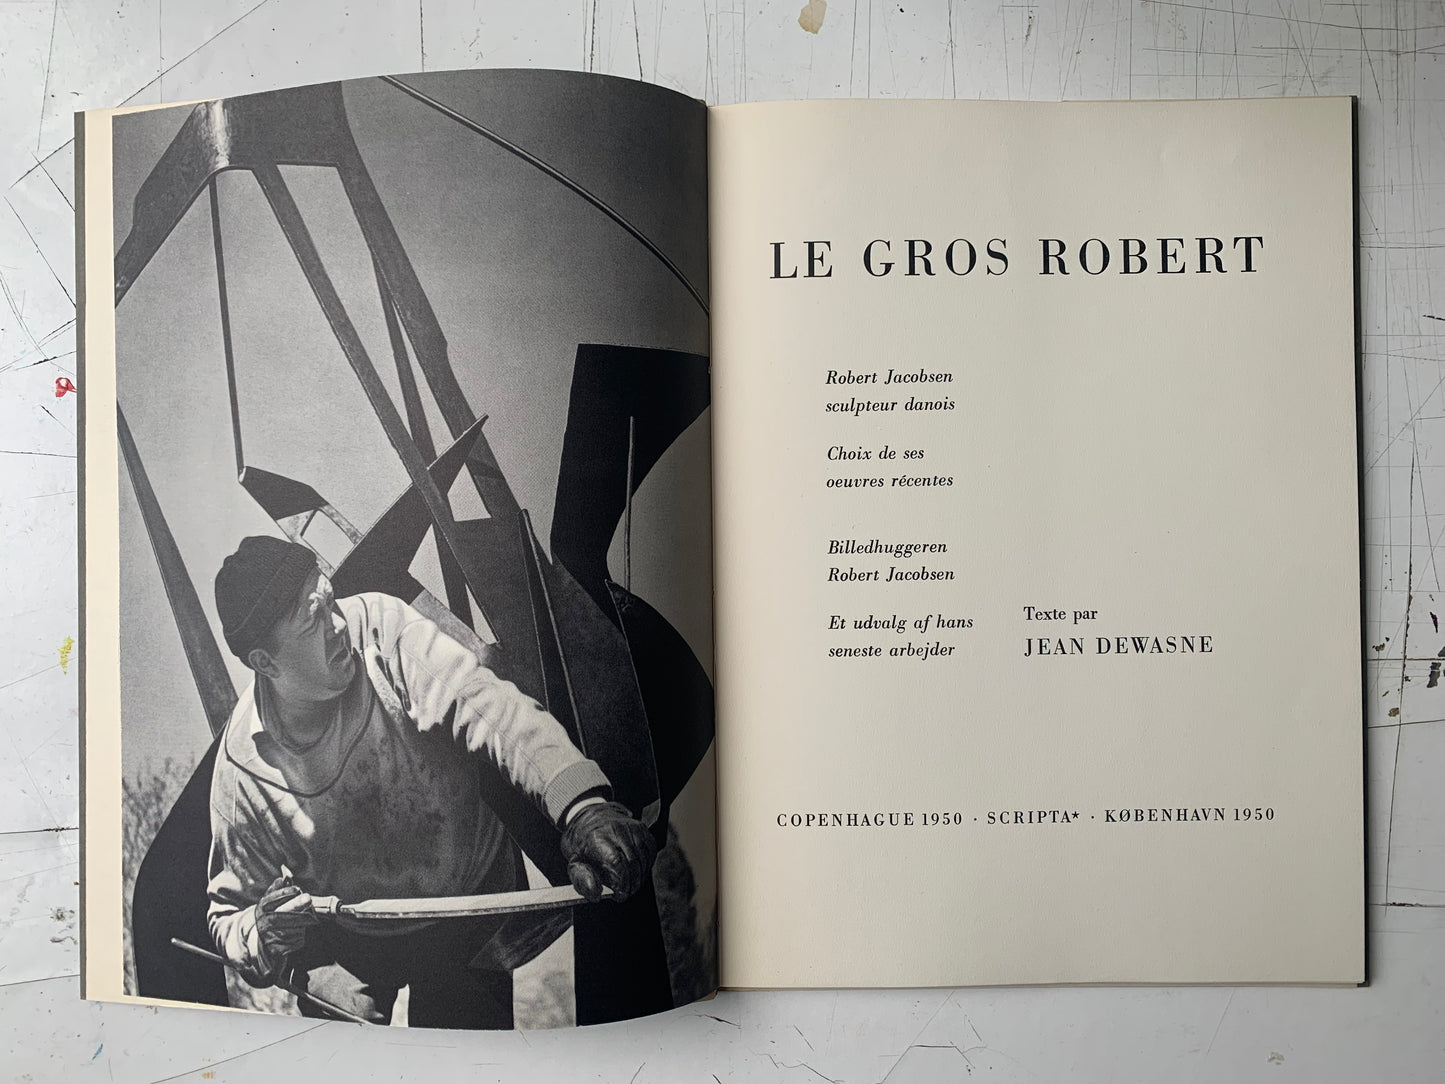 Jean Dewasne. "Le Gros Robert", 1950